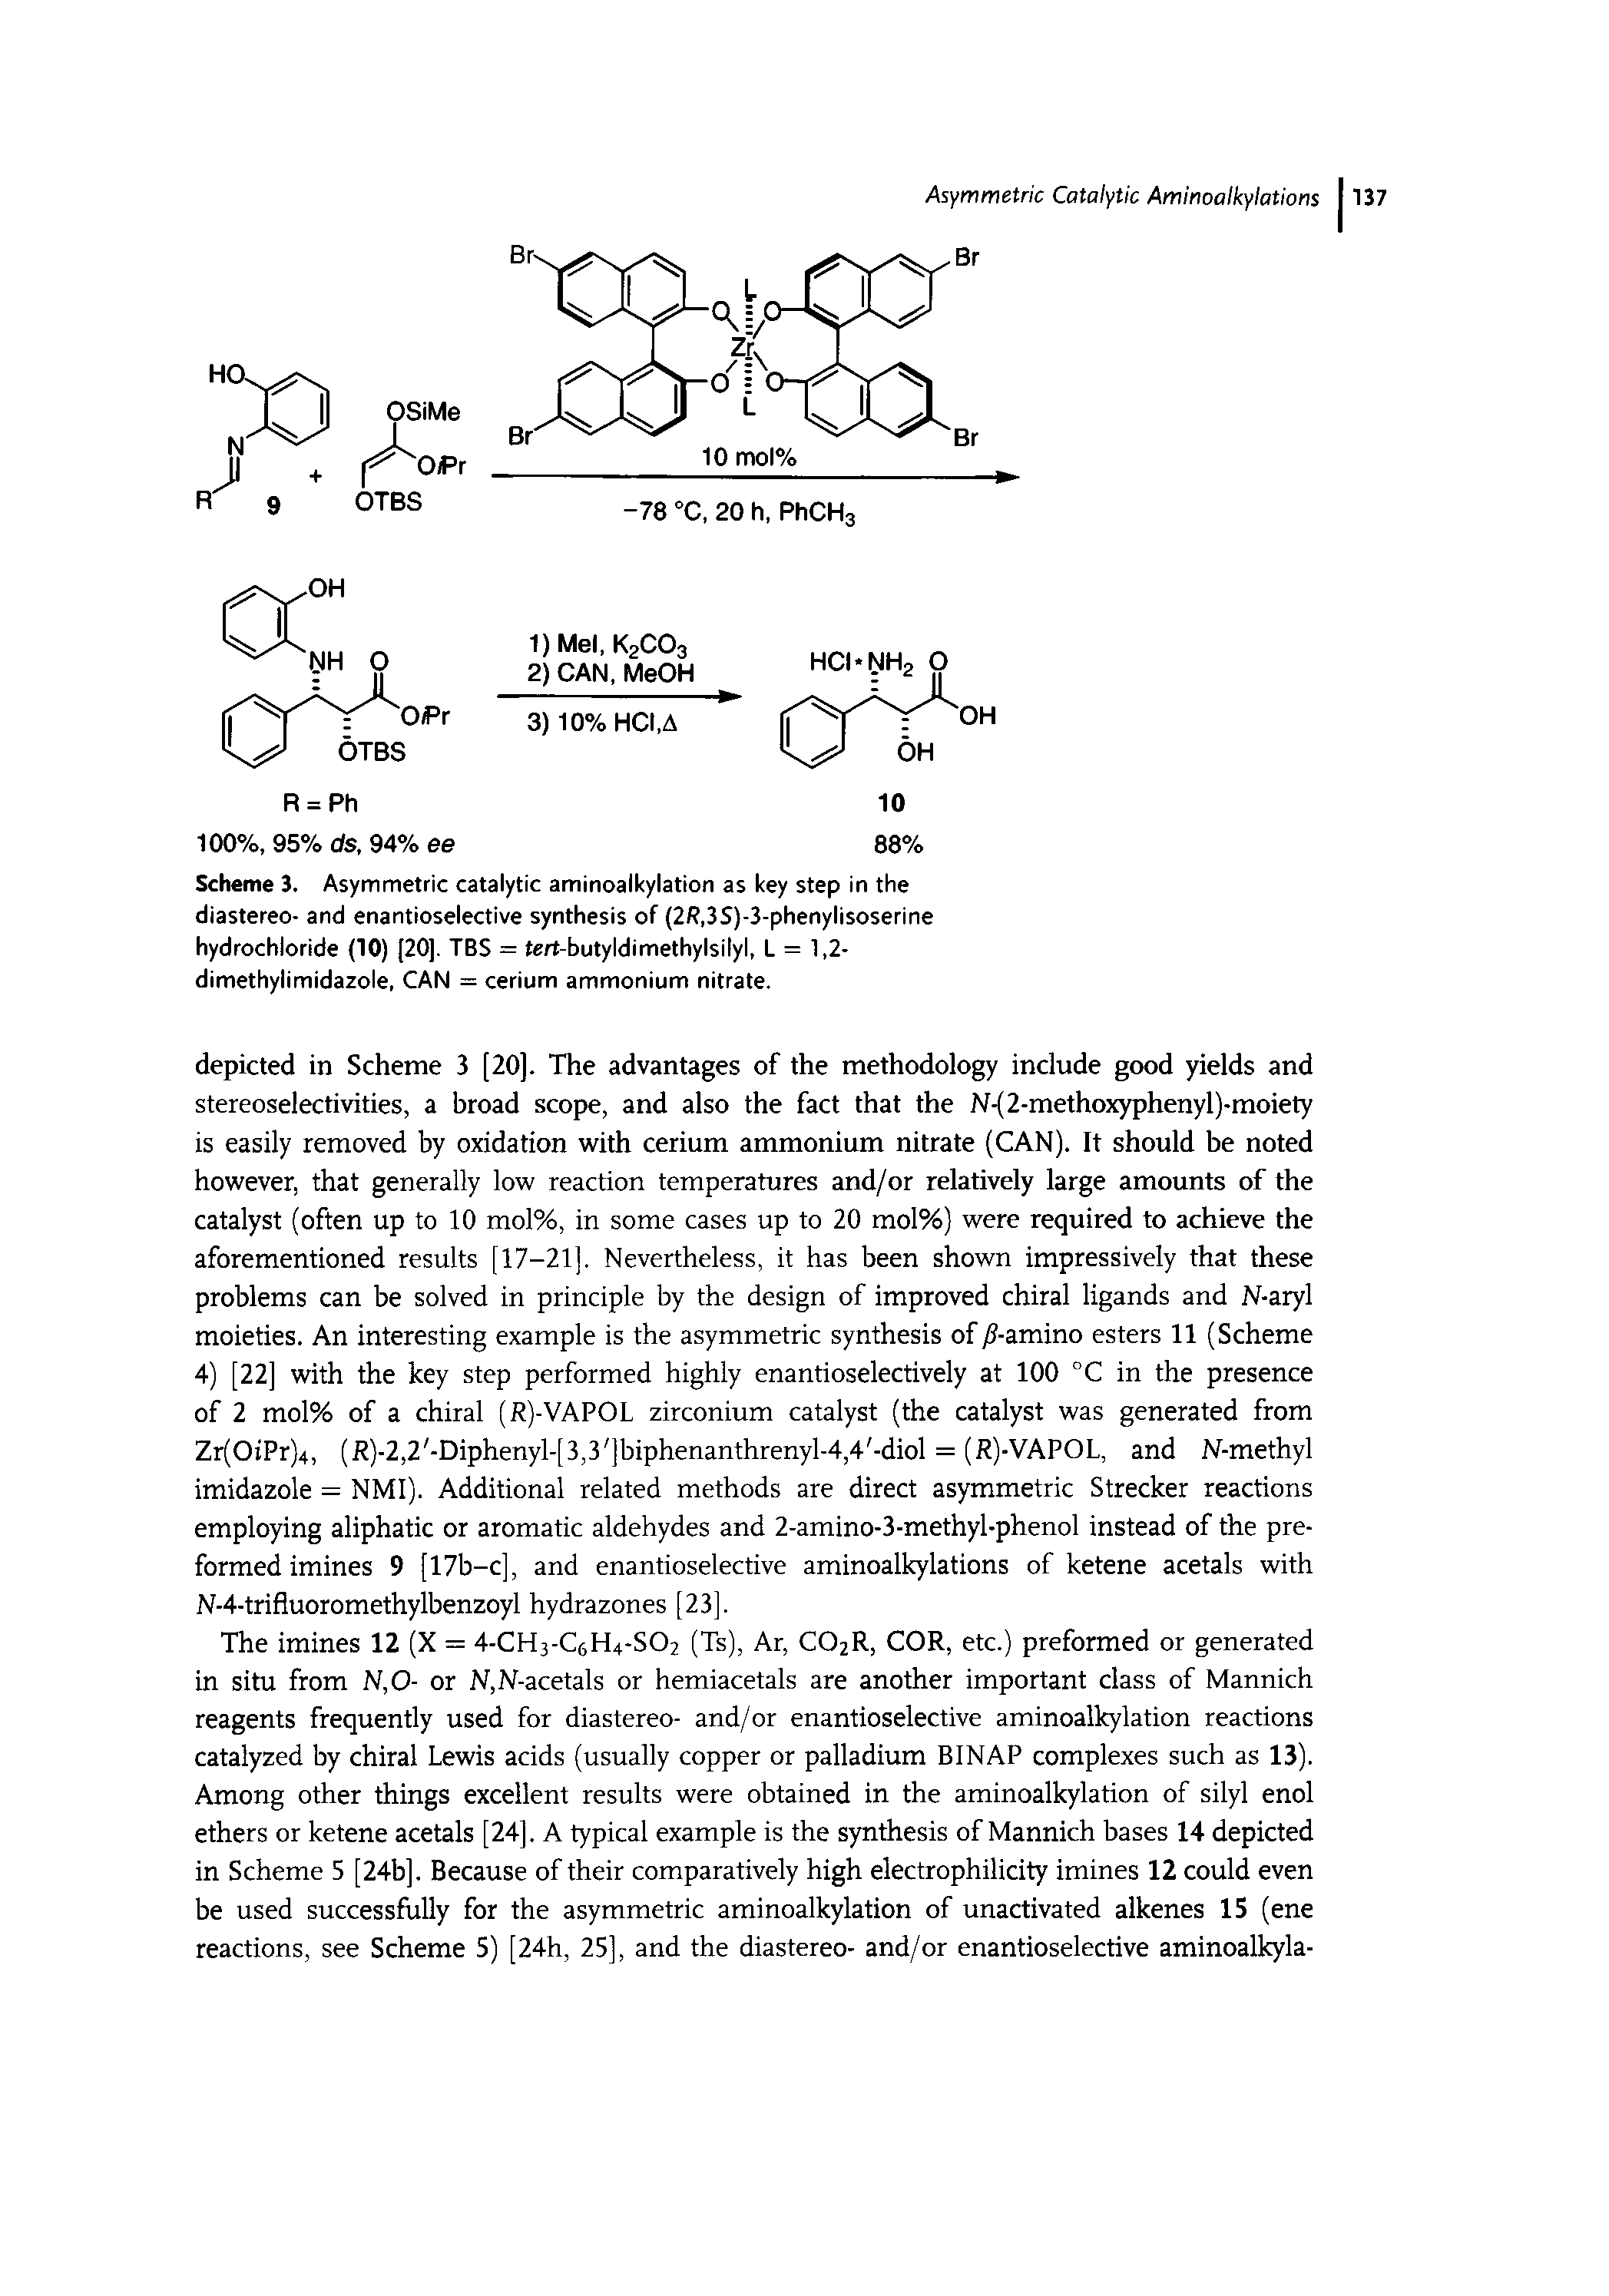 Scheme 3. Asymmetric catalytic aminoalkylation as key step in the diastereo- and enantioselective synthesis of (2R,3S)-3-phenylisoserine hydrochloride (10) [20]. TBS = tert-butyldimethylsilyl, L = 1,2-dimethylimidazole, CAN = cerium ammonium nitrate.